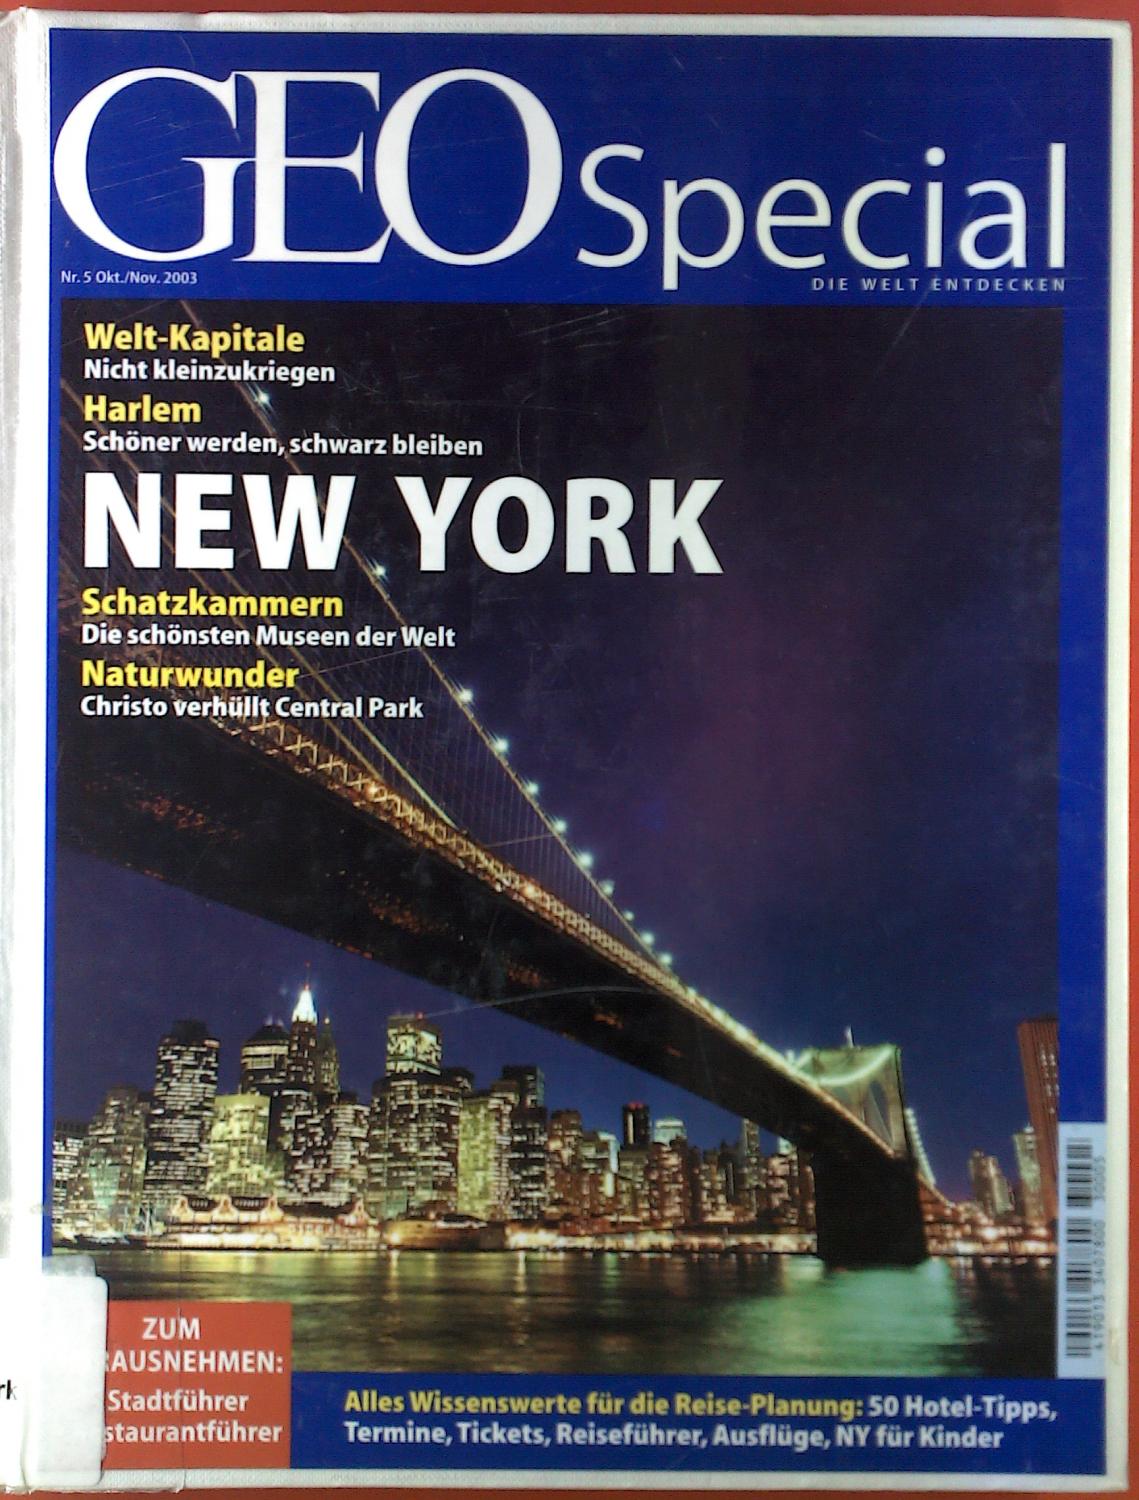 GEO Special. Die Welt erleben. New York. Nr. 5, Oktober / November 2003.